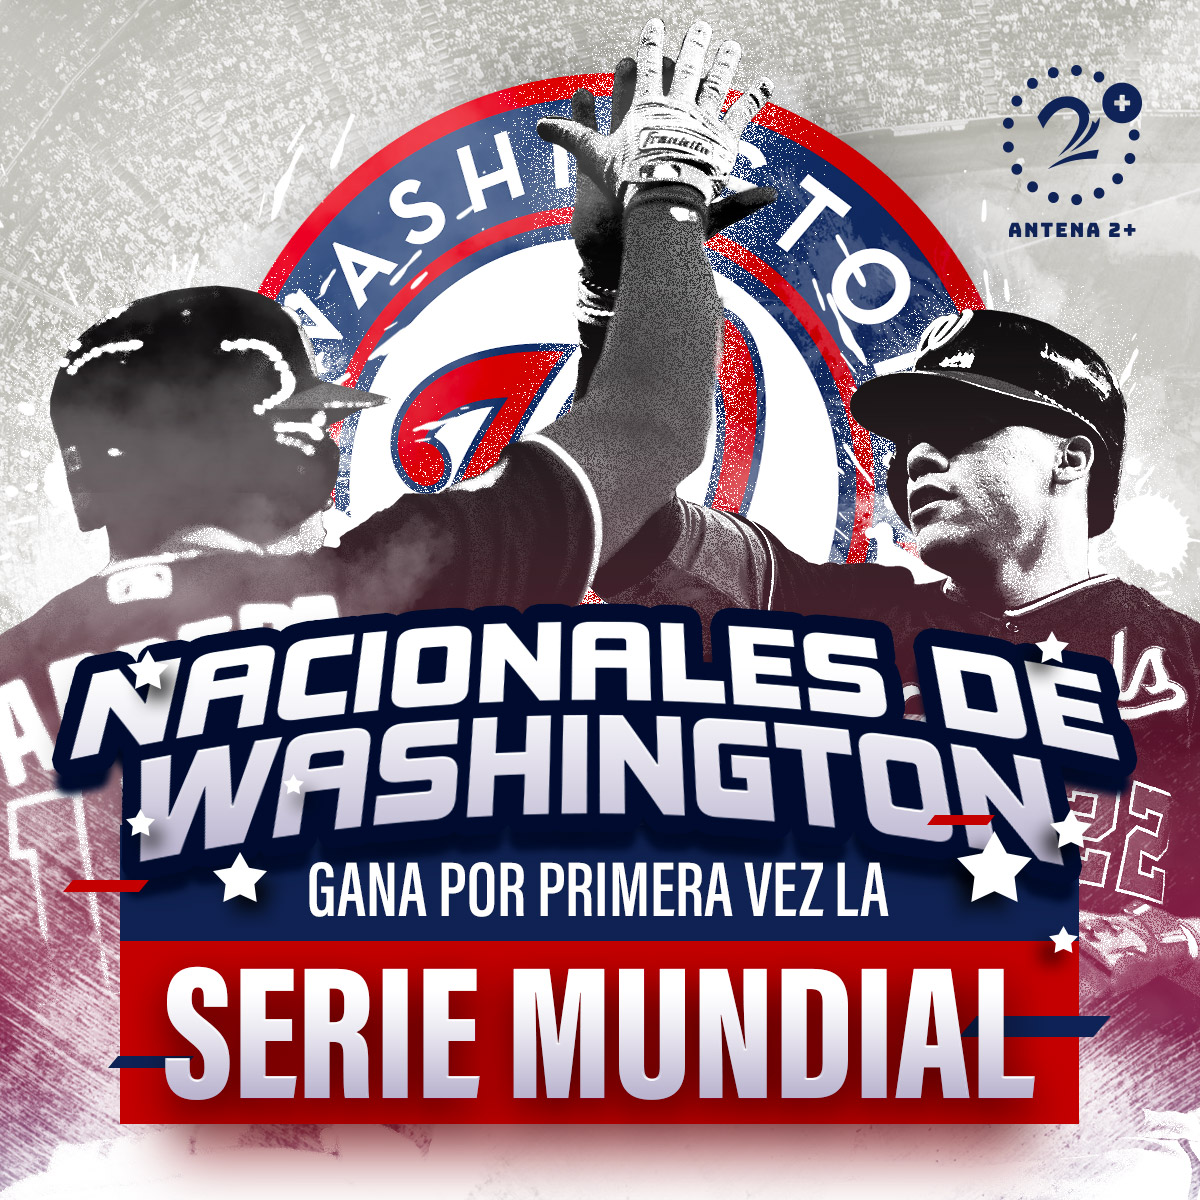 Nacionales de Washington, Serie Mundial